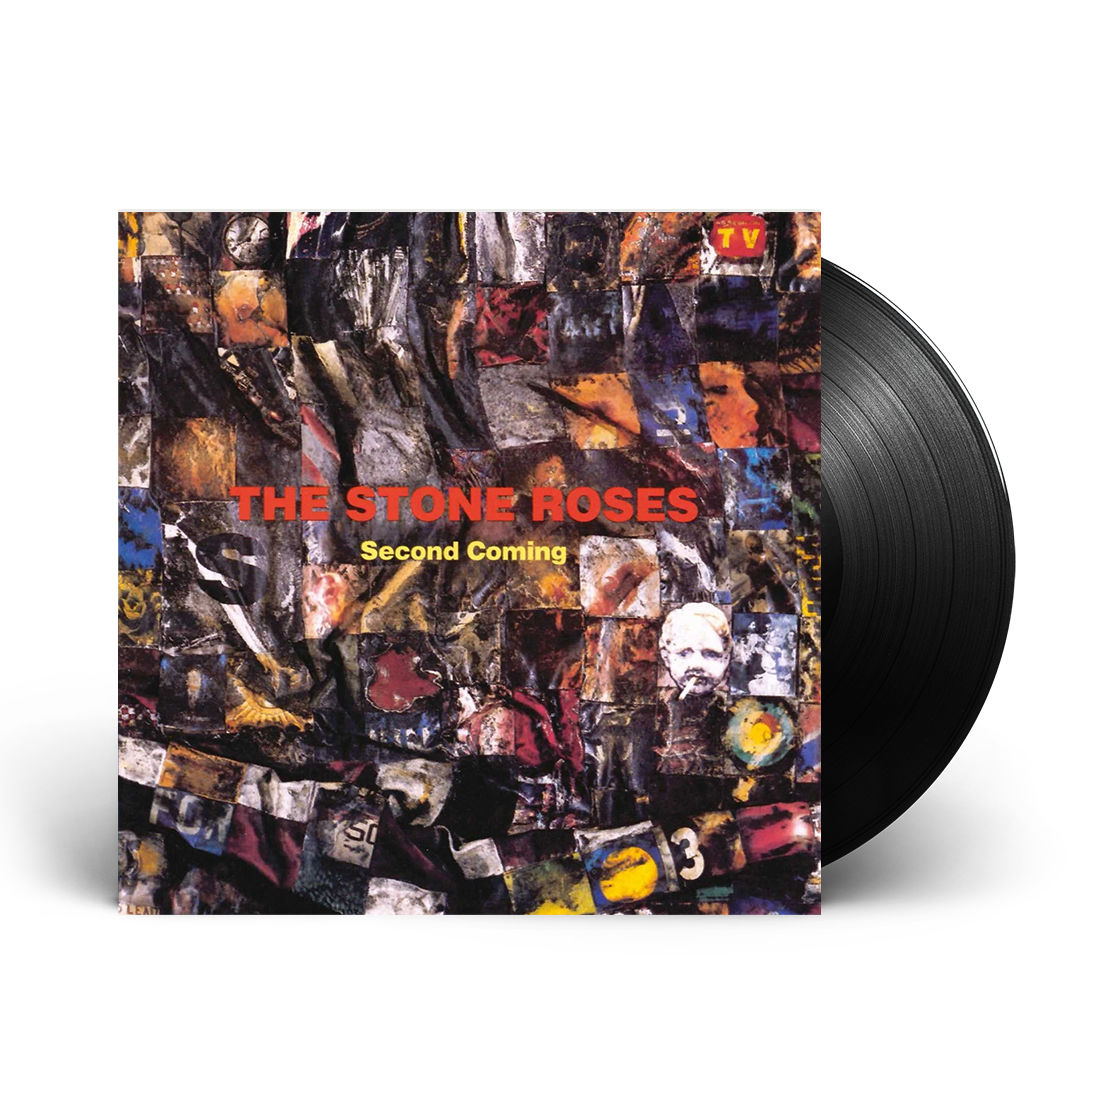 The Stone Roses - Second Coming: Vinyl LP - Sound of Vinyl